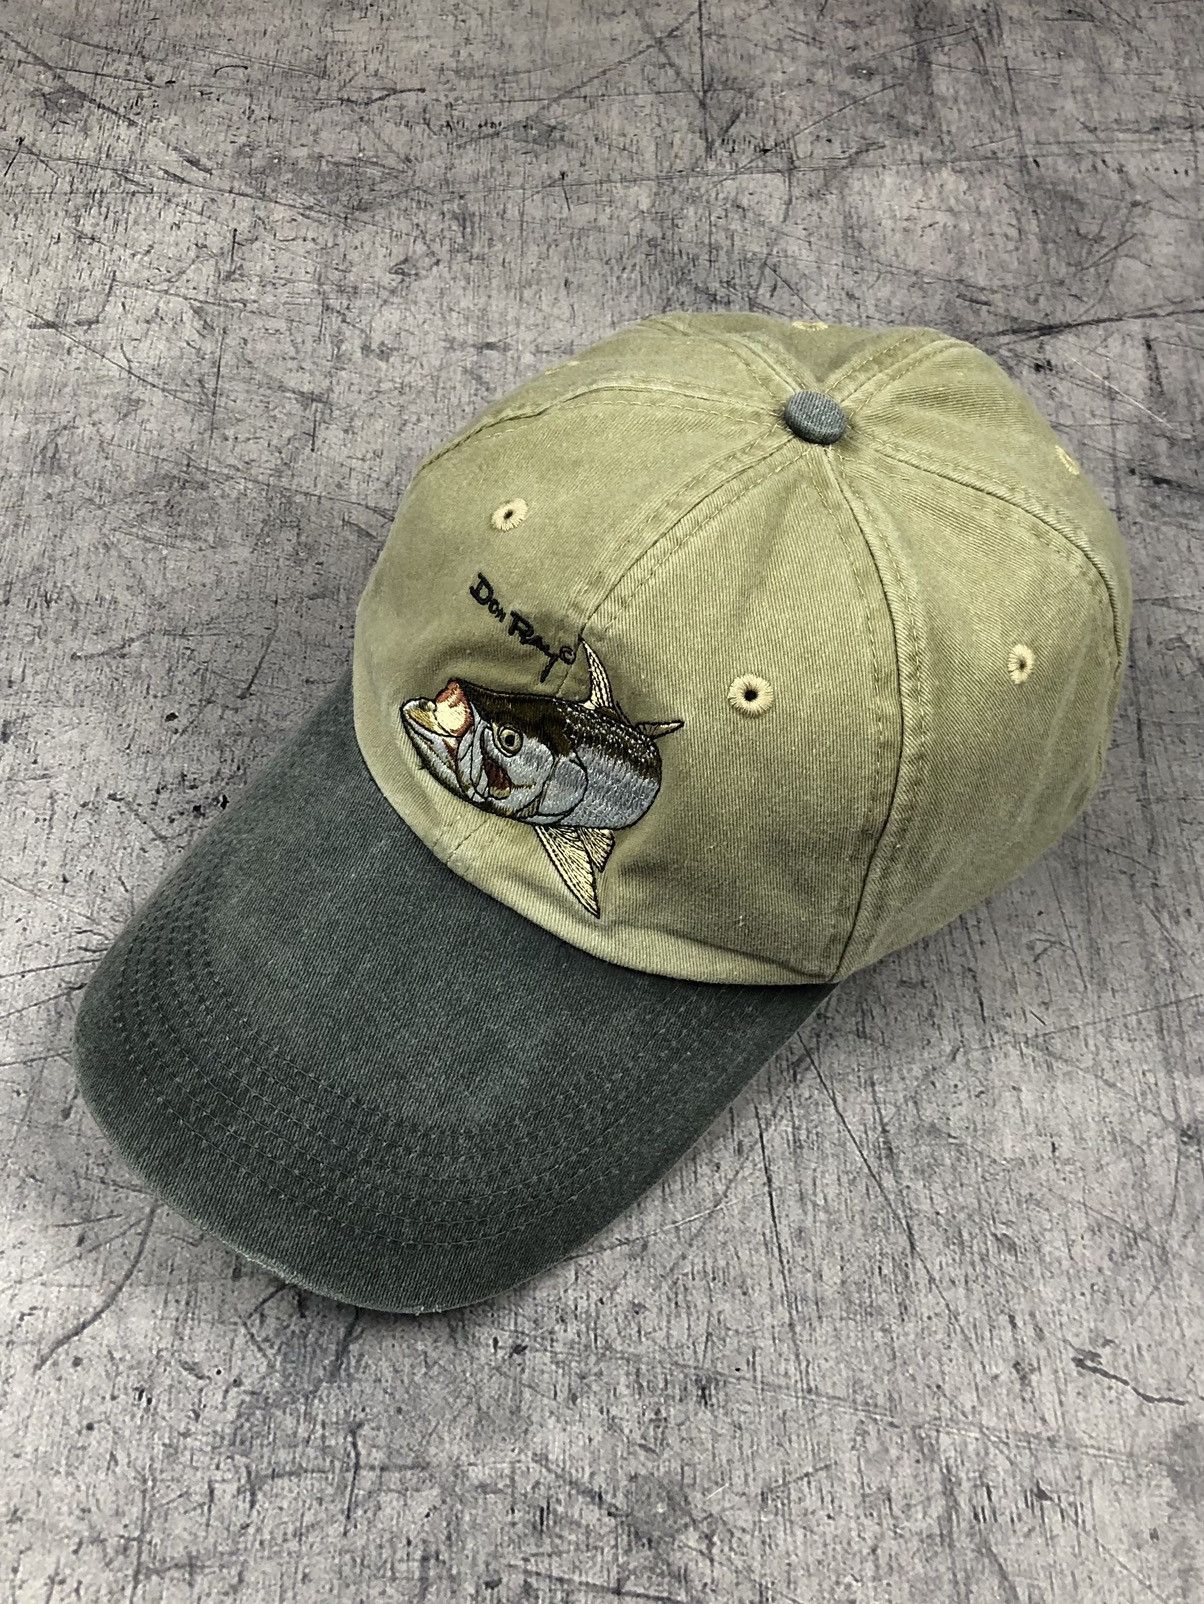 Vintage Vintage fishing hat